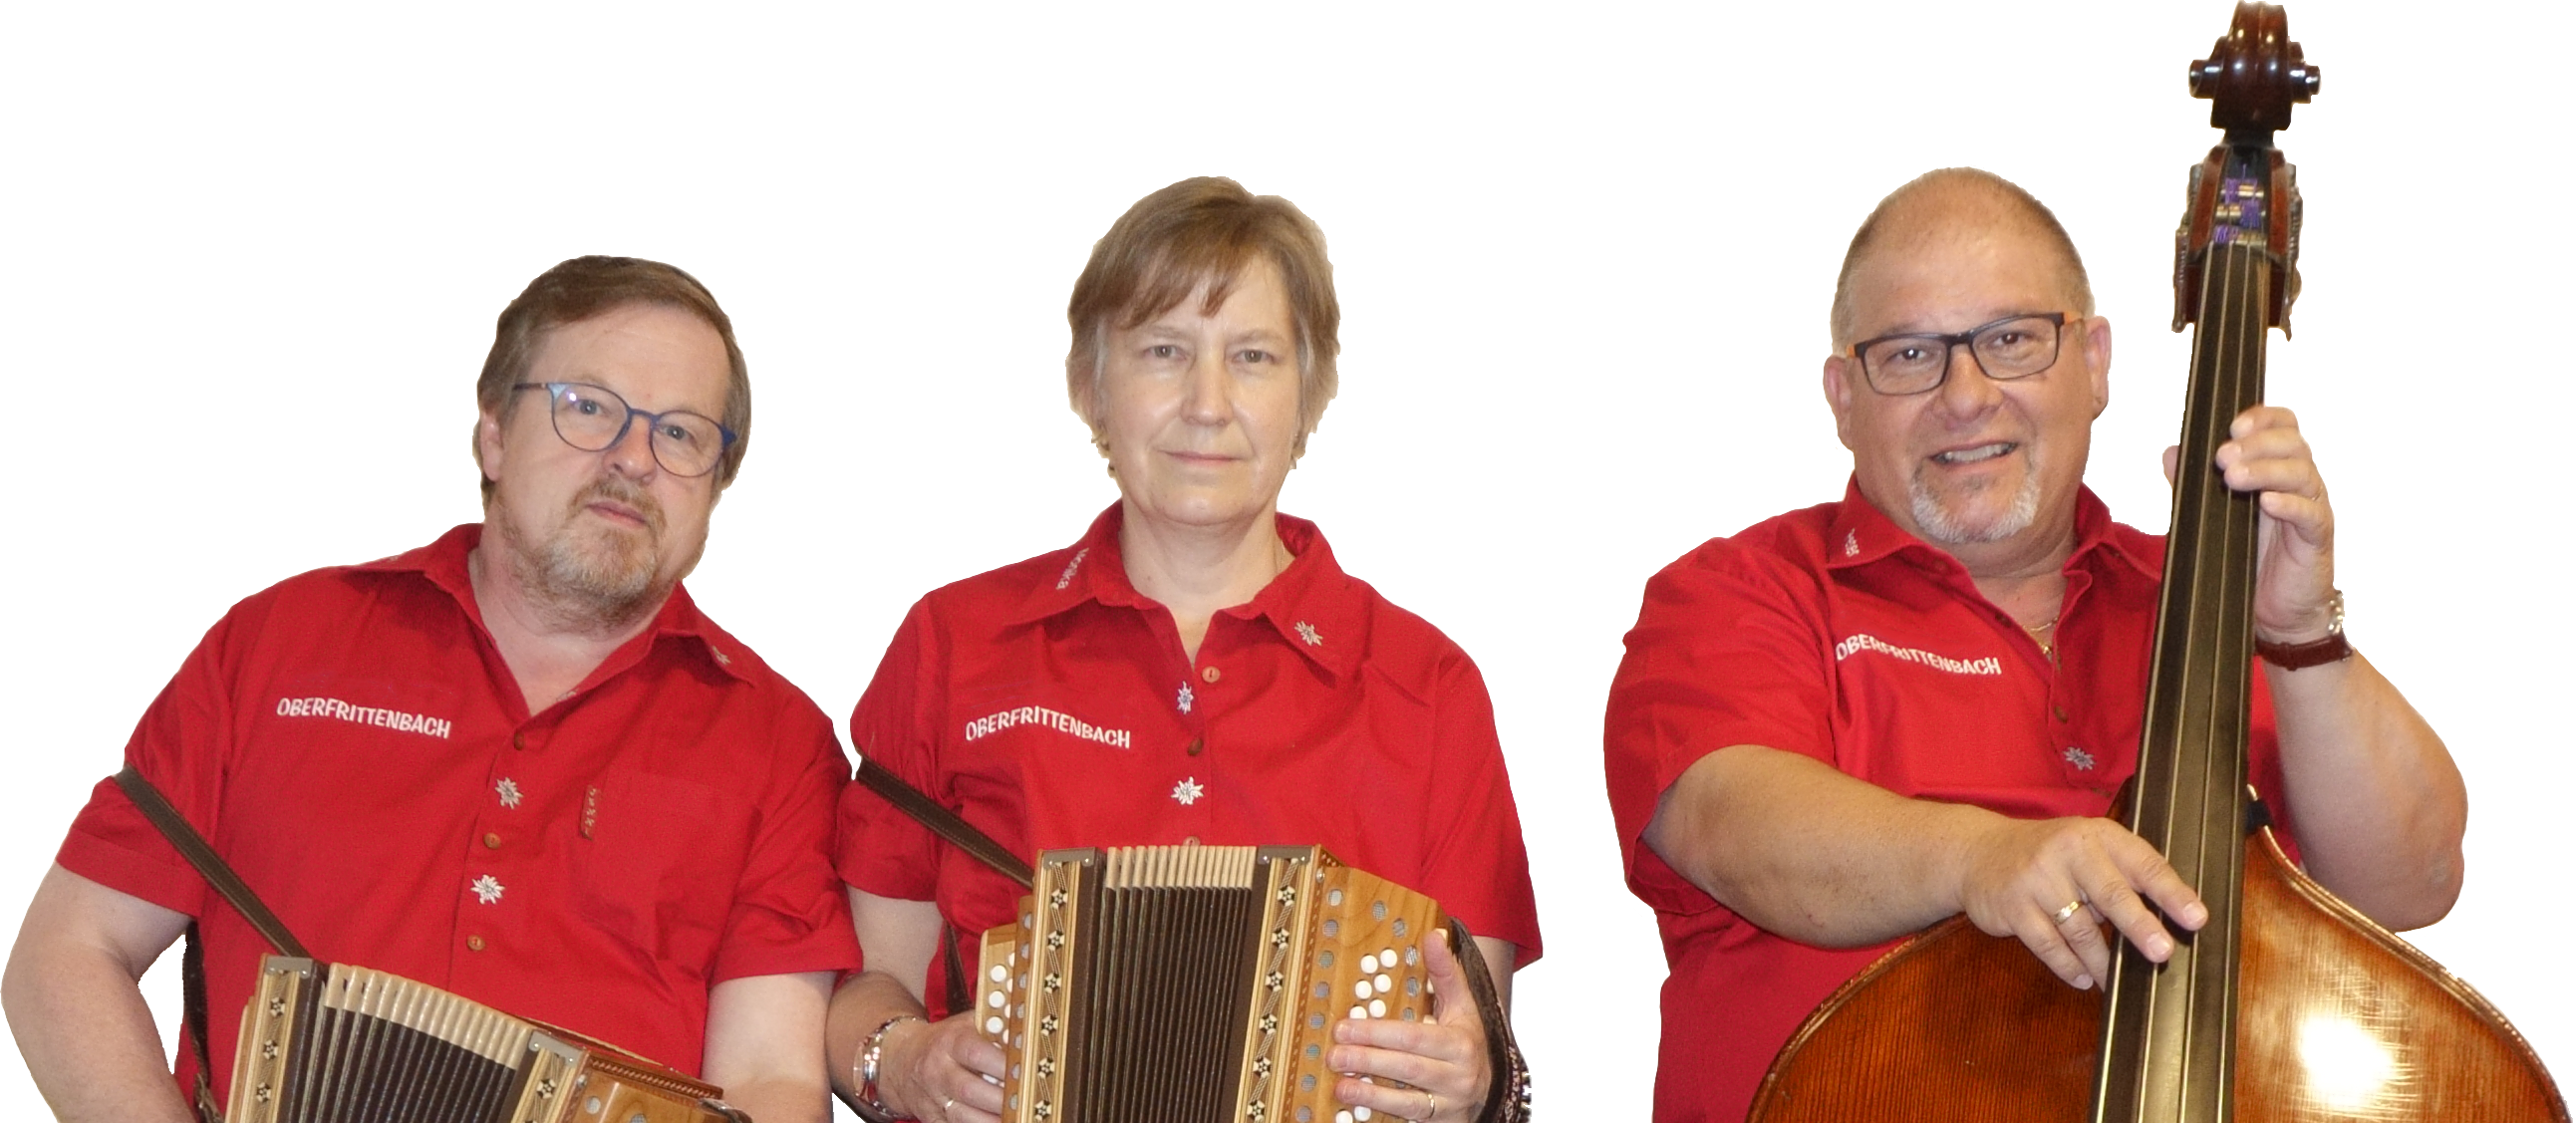 Schwyzerörgeli-Trio Oberfrittenbach